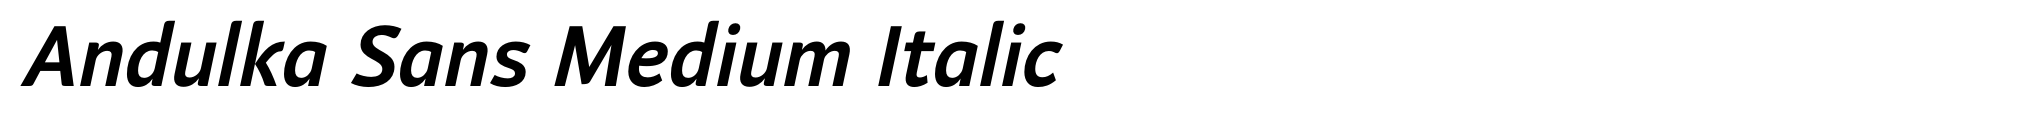 Andulka Sans Medium Italic image